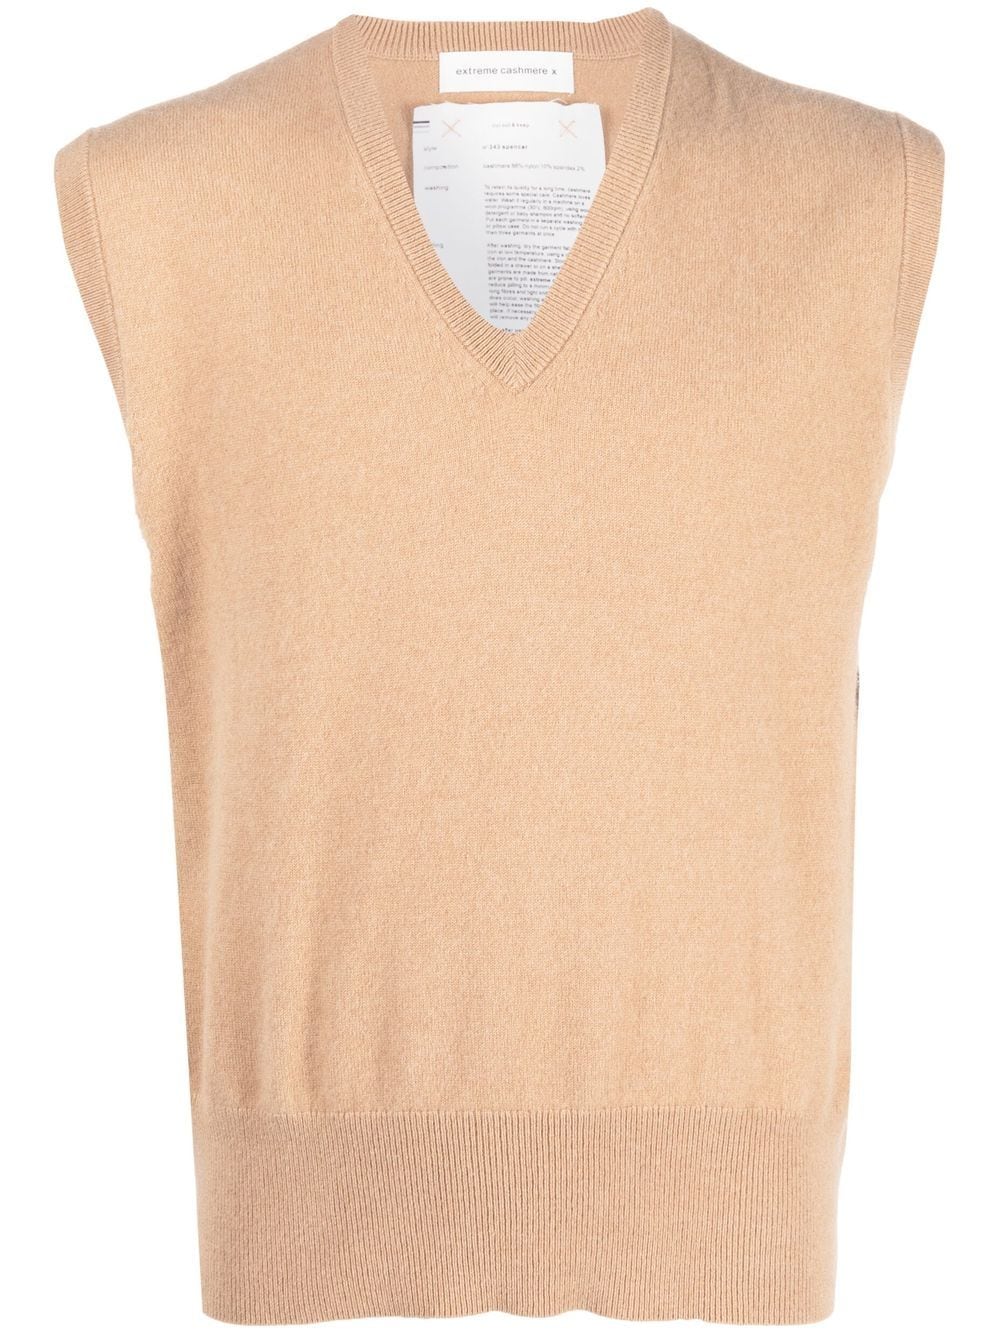 Image 1 of extreme cashmere V-neck knit vest